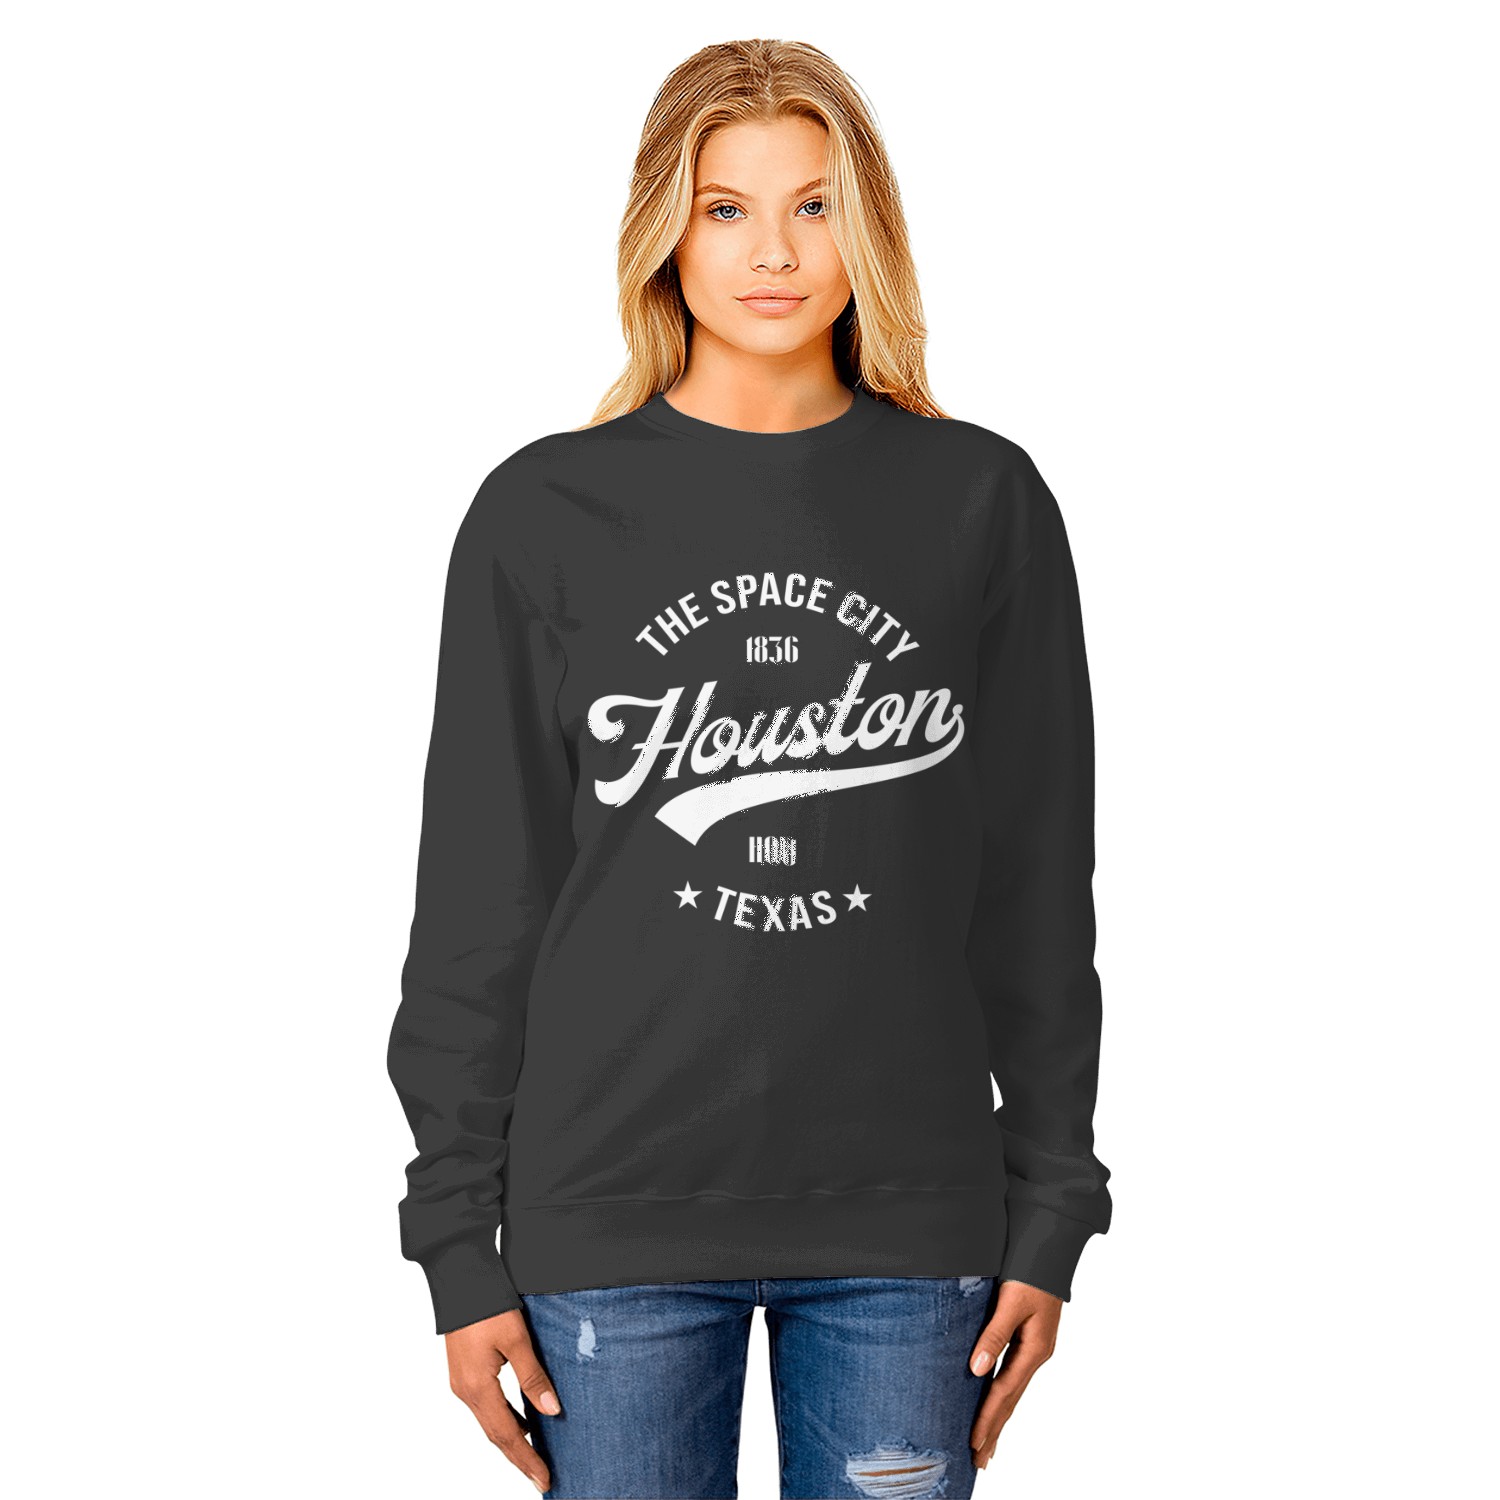 Houston trashtros funny cheaters cheated houston asterisks shirt, hoodie,  sweatshirt for men and women